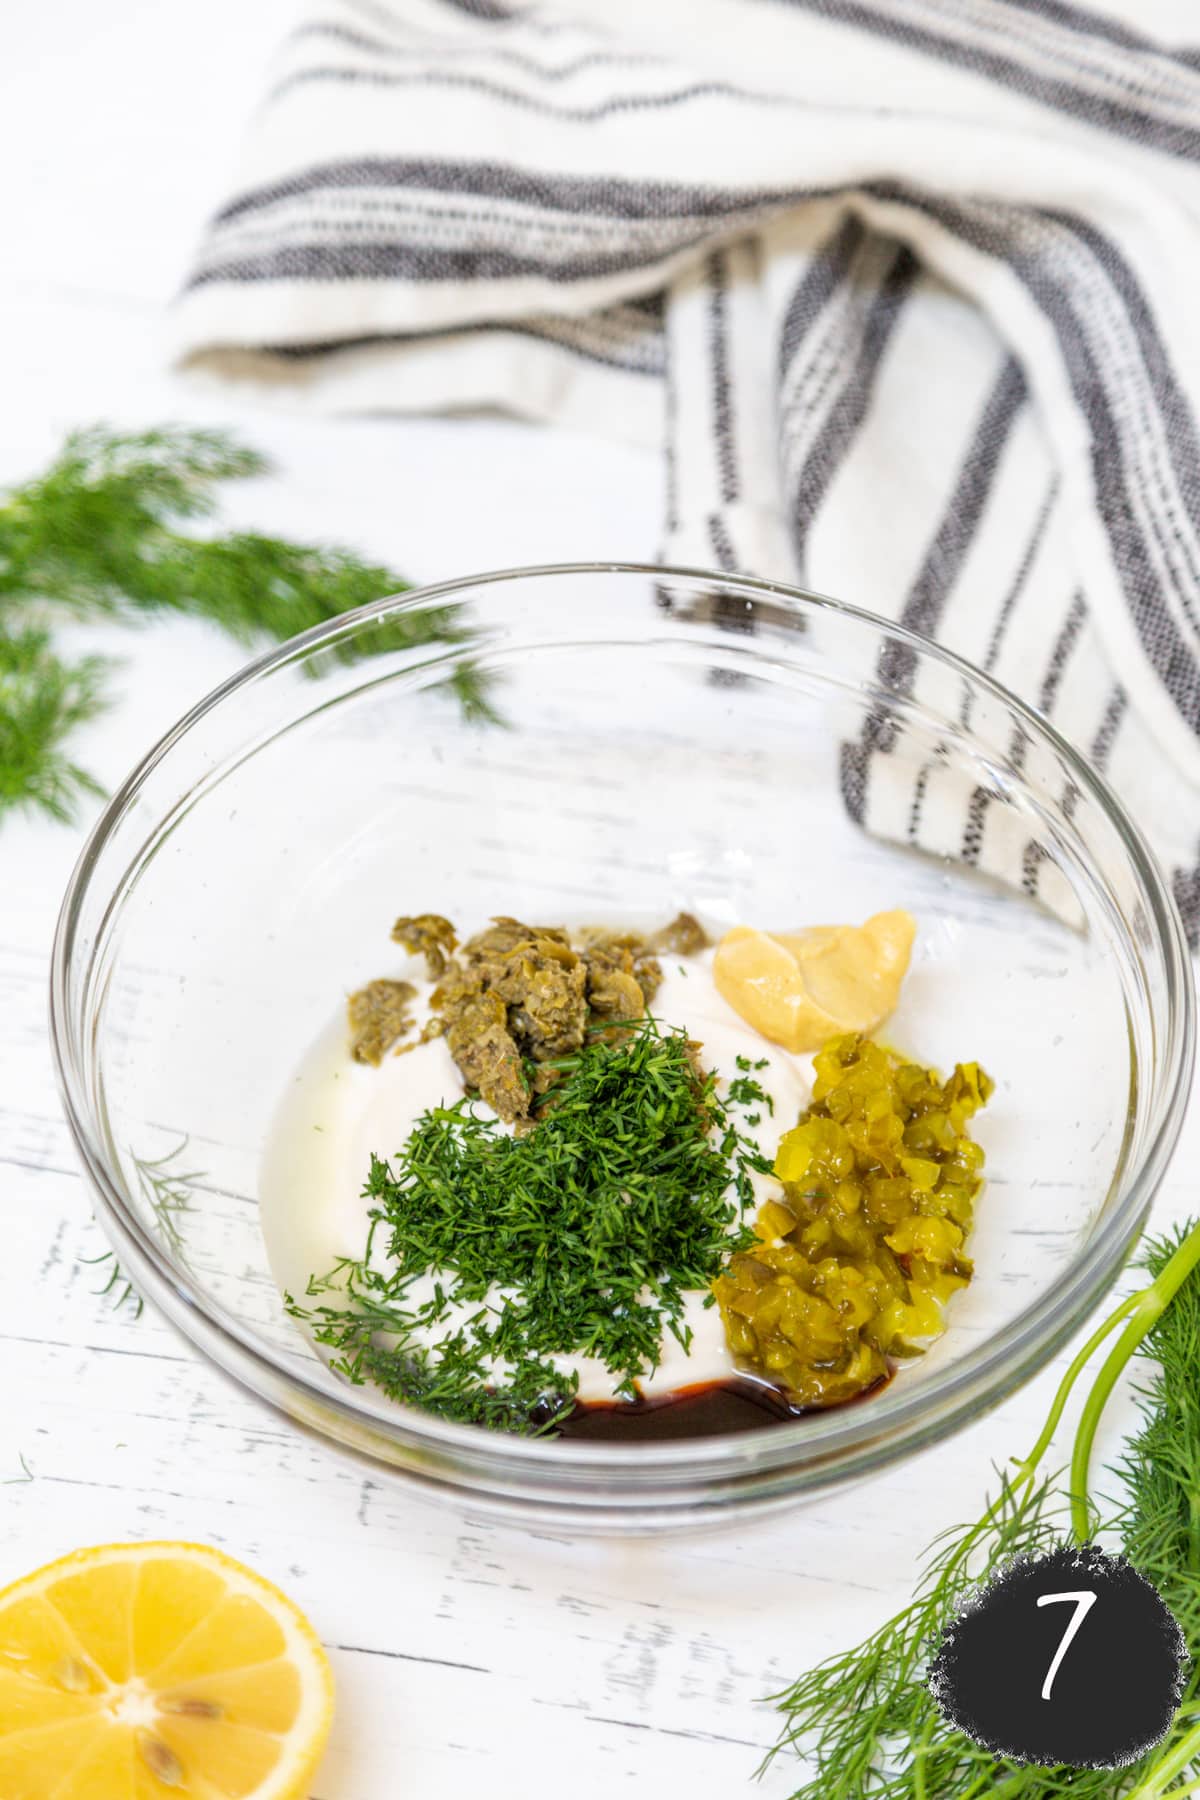 A glass mixing bowl with ingredients for vegan tartar sauce.